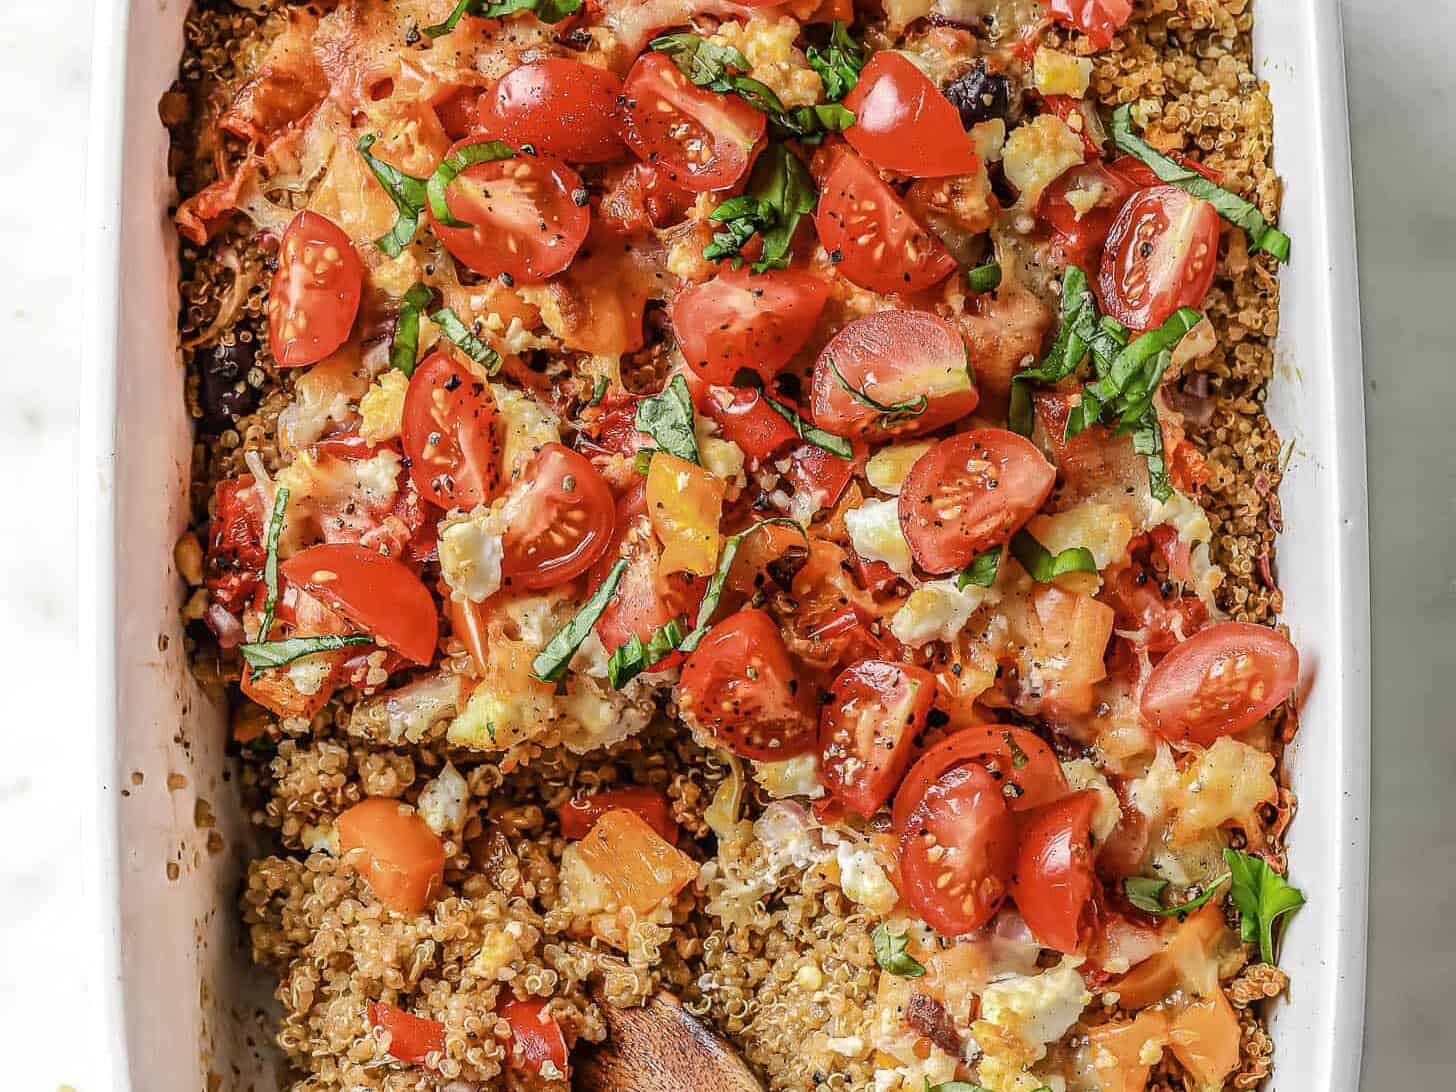 Mediterranean quinoa casserole for dinner